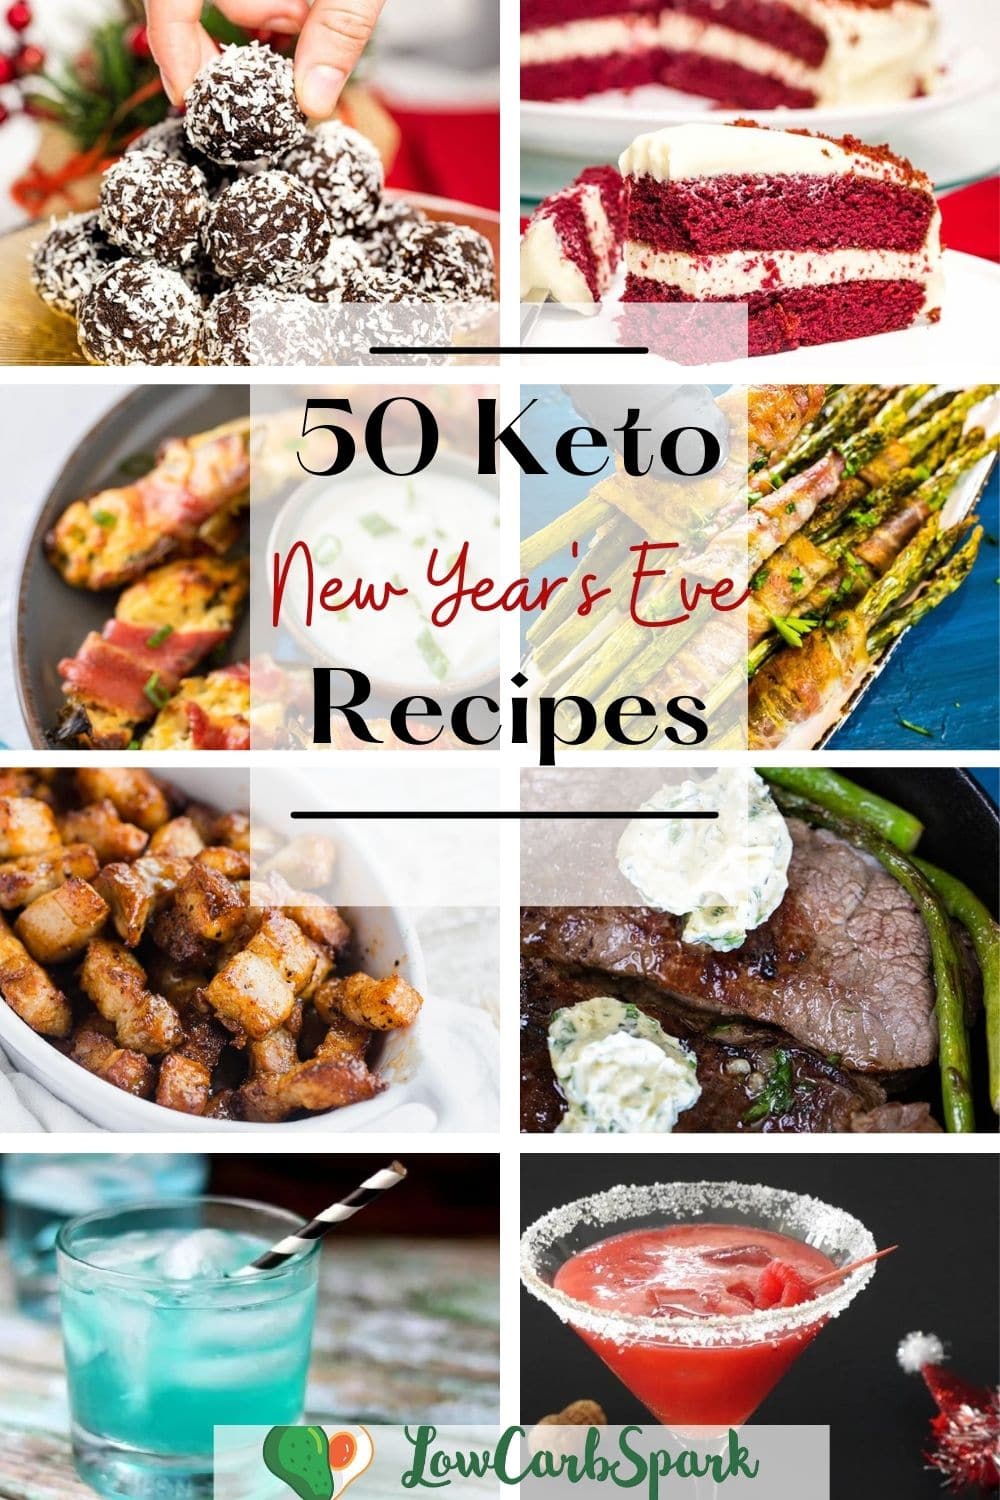 50 Keto New Year's Eve Recipes - Low Carb Festive Recipes